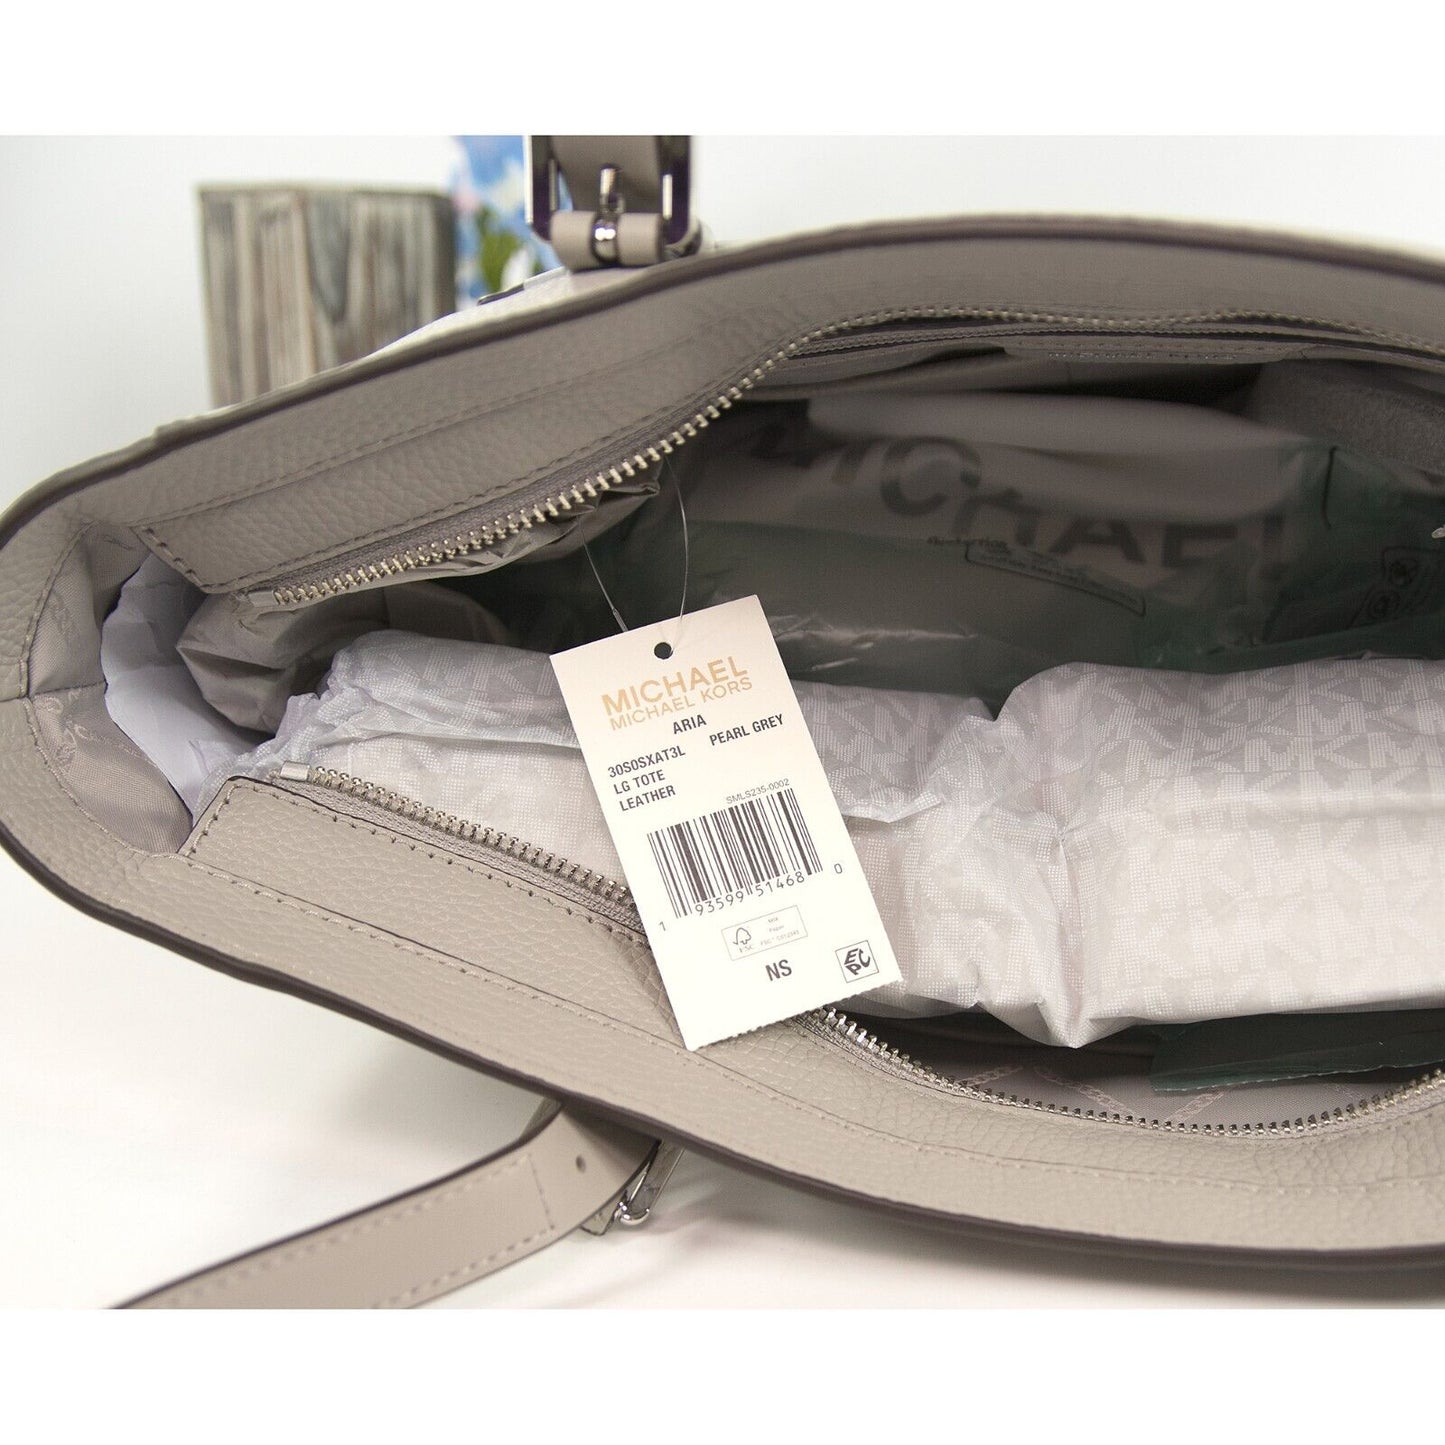 MICHAEL KORS JET Set LARGE Saffiano Leather Pocket Tote Bag Pearl Grey/Silver  £47.10 - PicClick UK